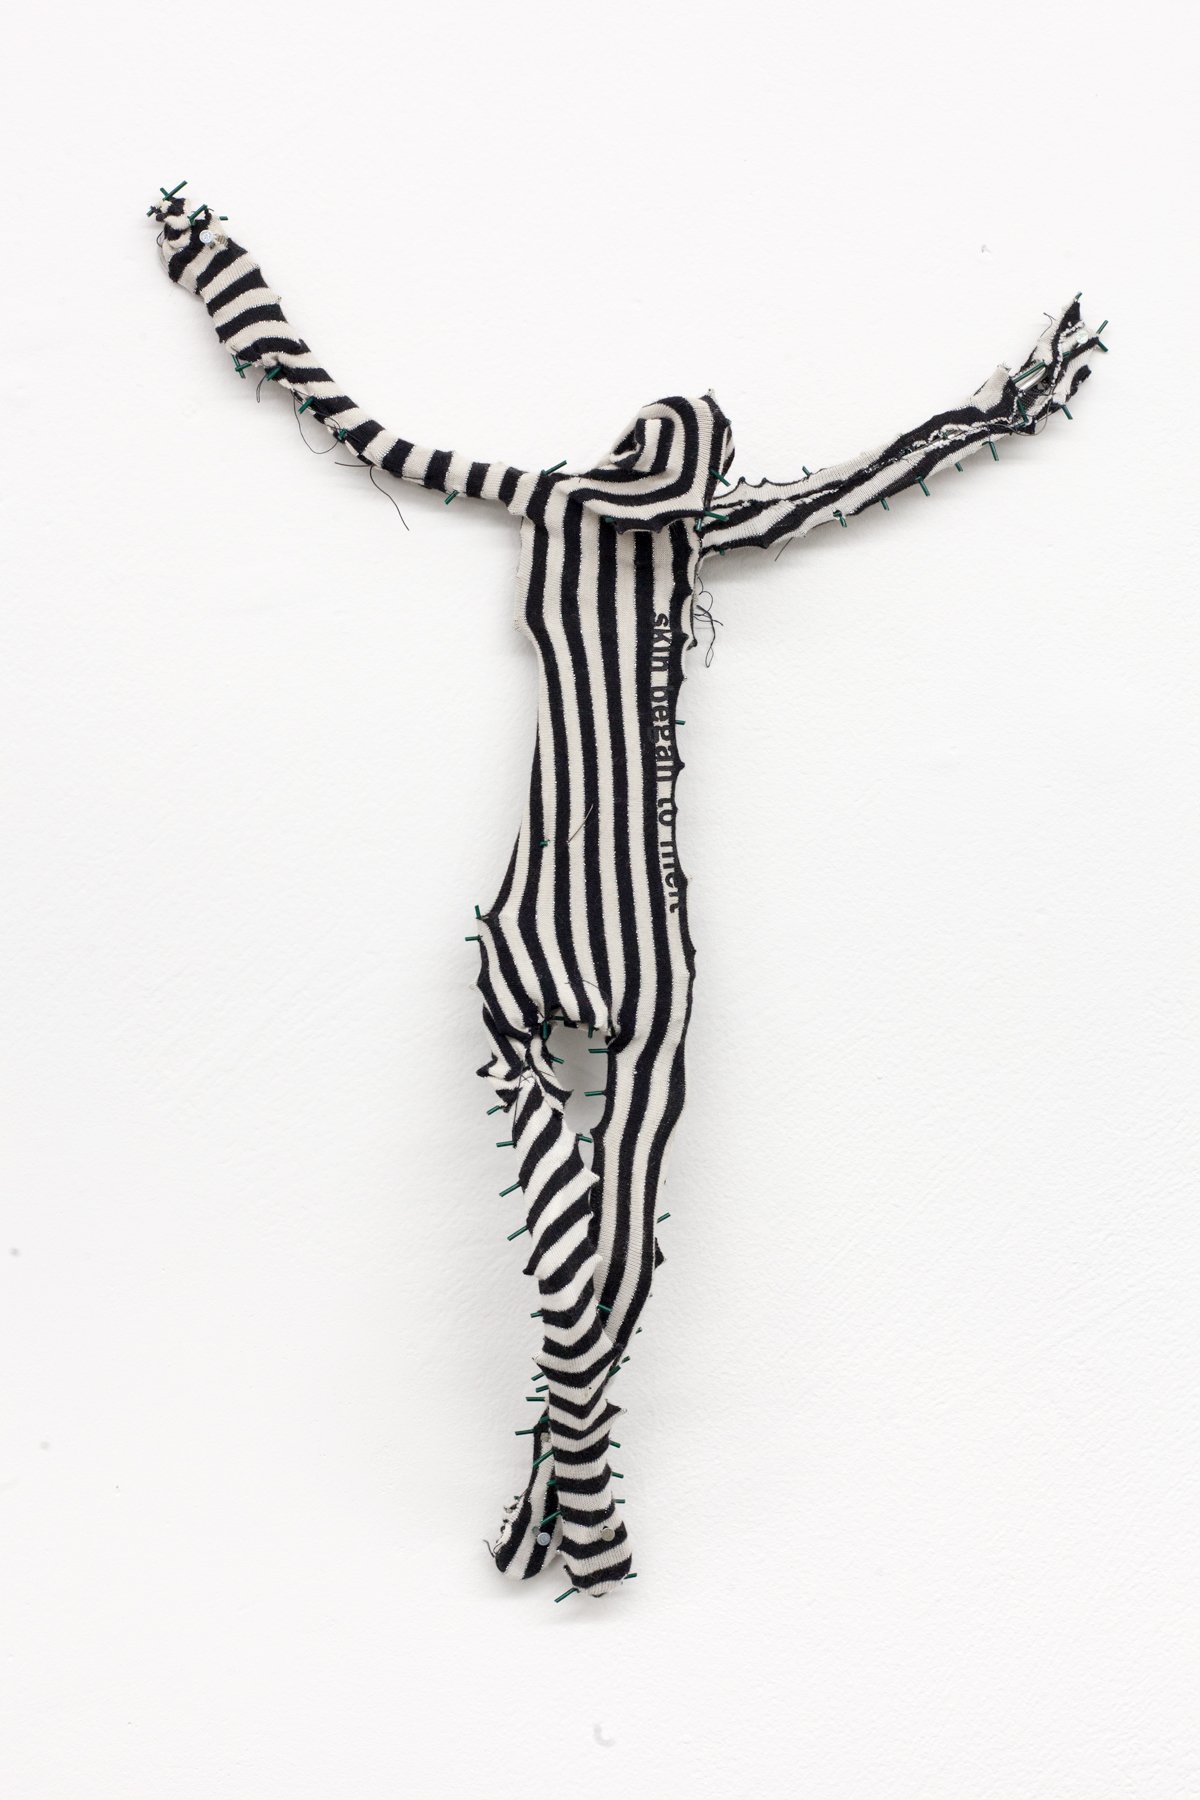   Bikini Crucifixion no. 3 , 2020. Old bathingsuits, steel, cotton thread. 16 x 12 x 2.5 inches. 